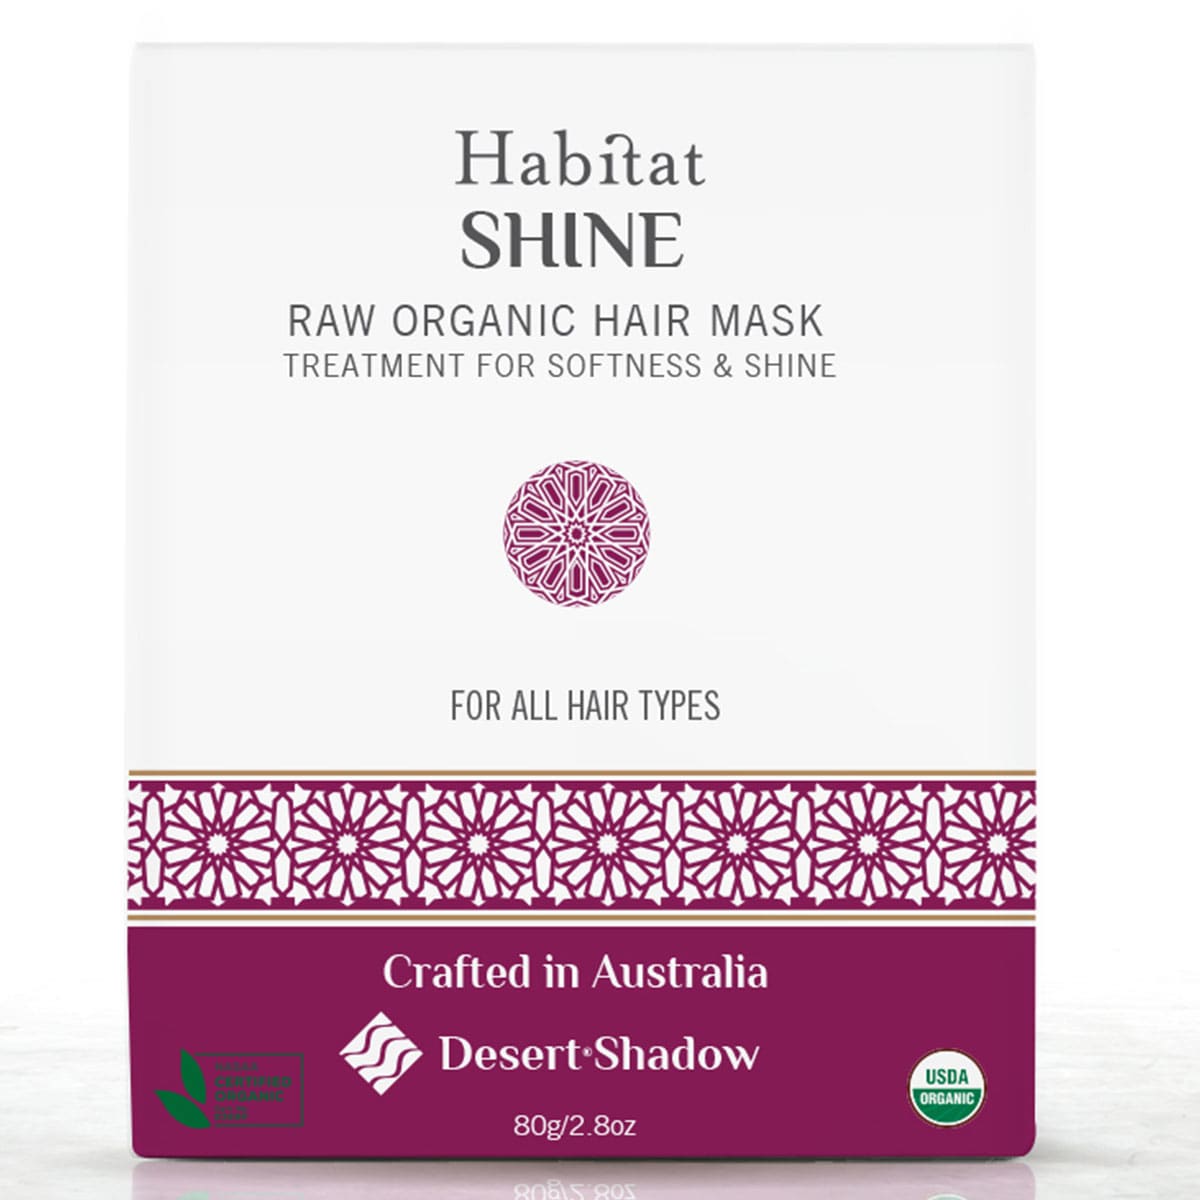 Desert Shadow Habitat Shine Raw Organic Hair Mask 80g